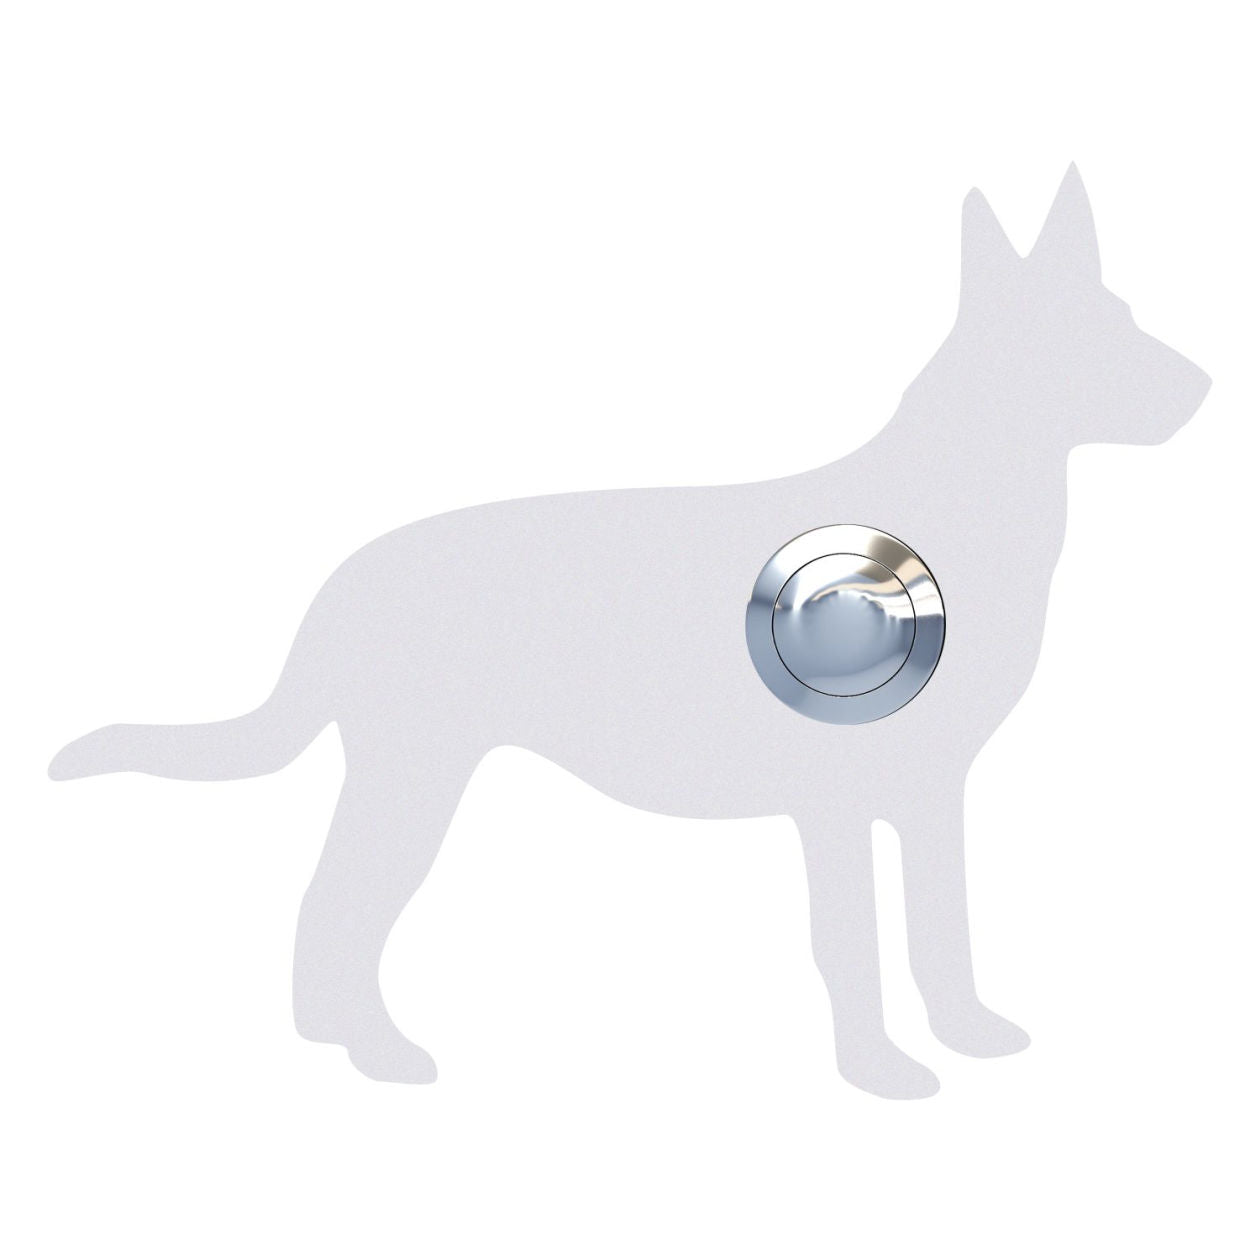 HUND "Emma" – German Shepard dog-shaped stainless-steel door bell